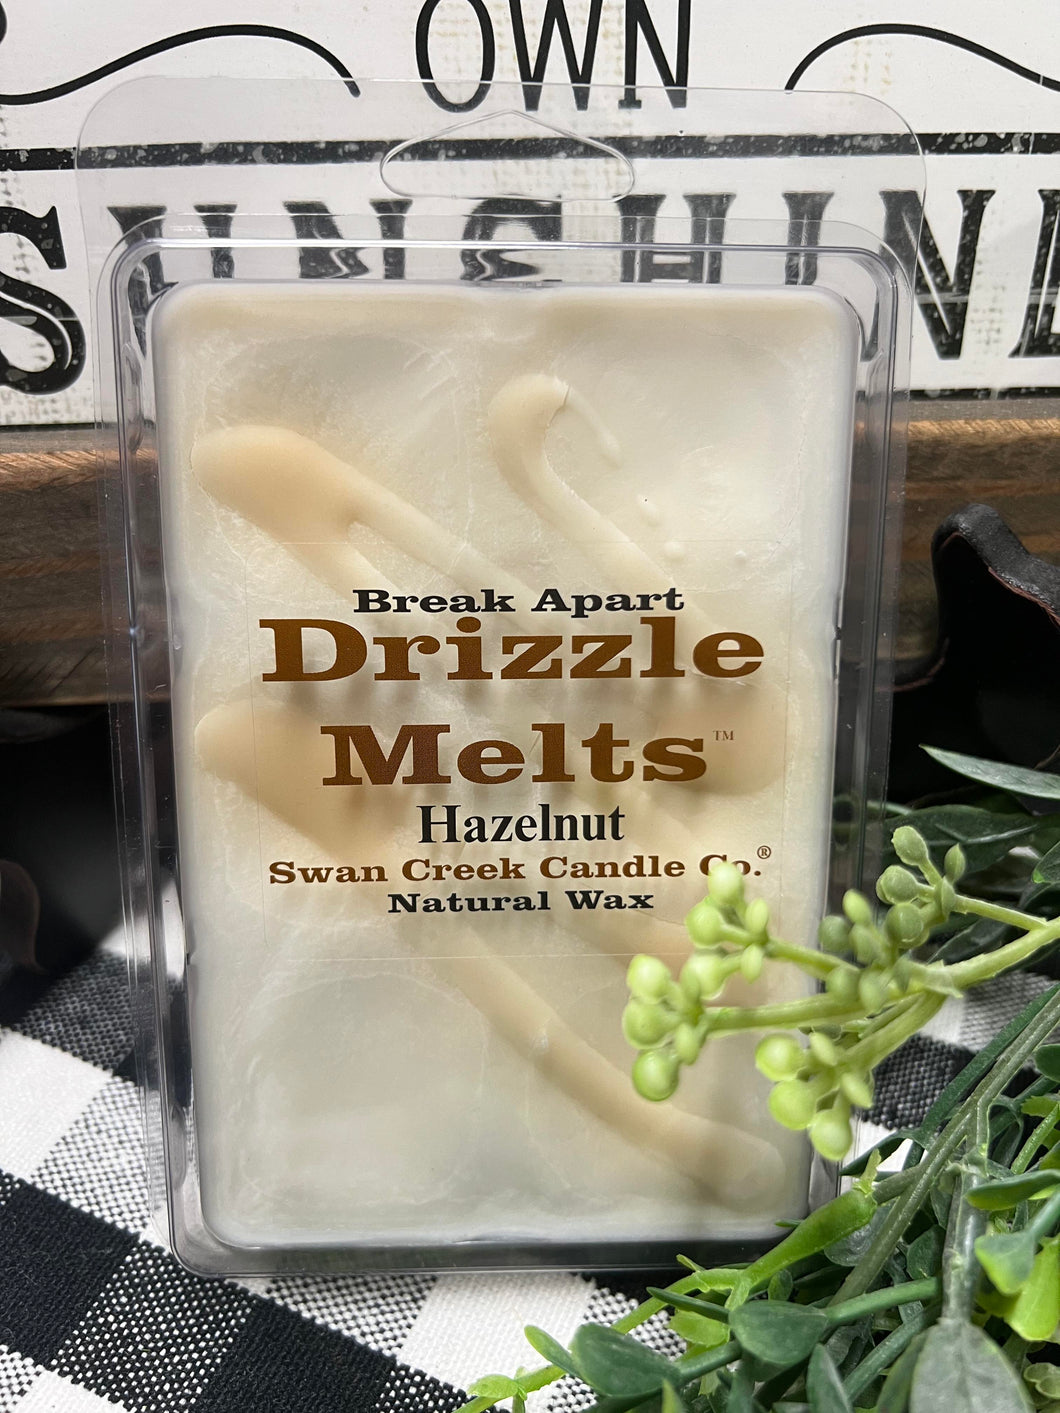 Swan Creek Candle Co. Hazelnut Drizzle Melts